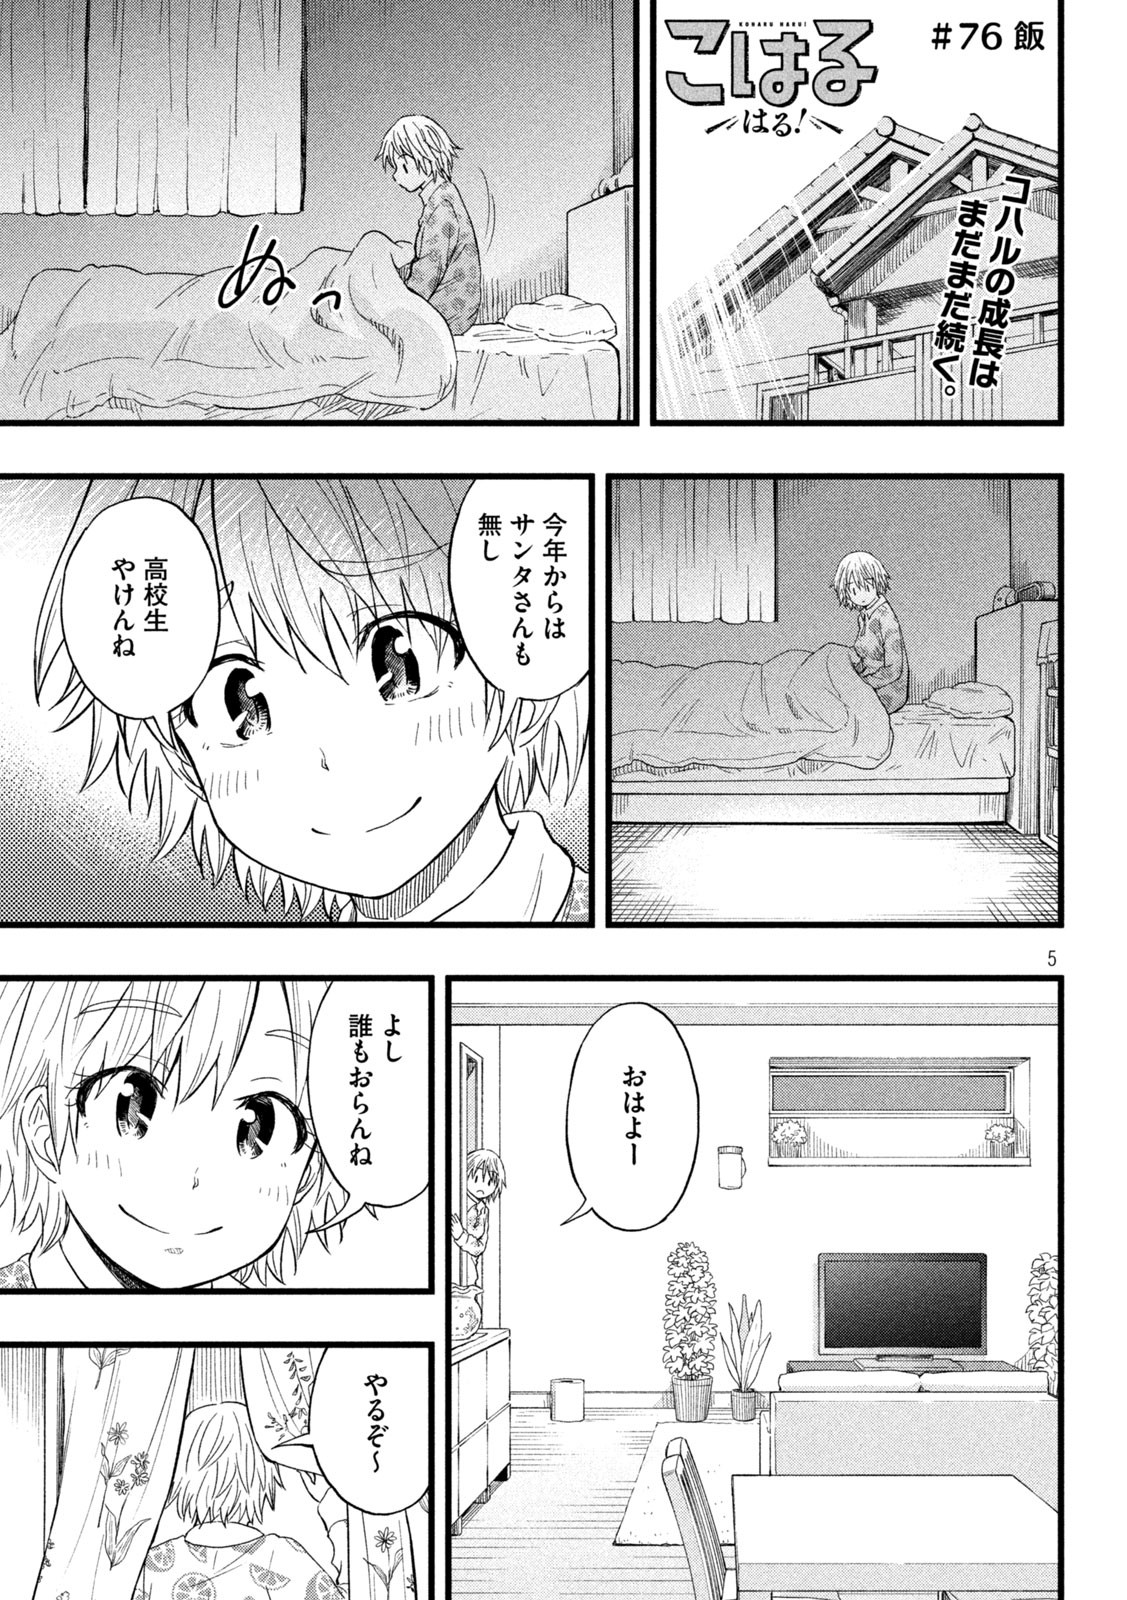 Koharu haru! - Chapter 76 - Page 1